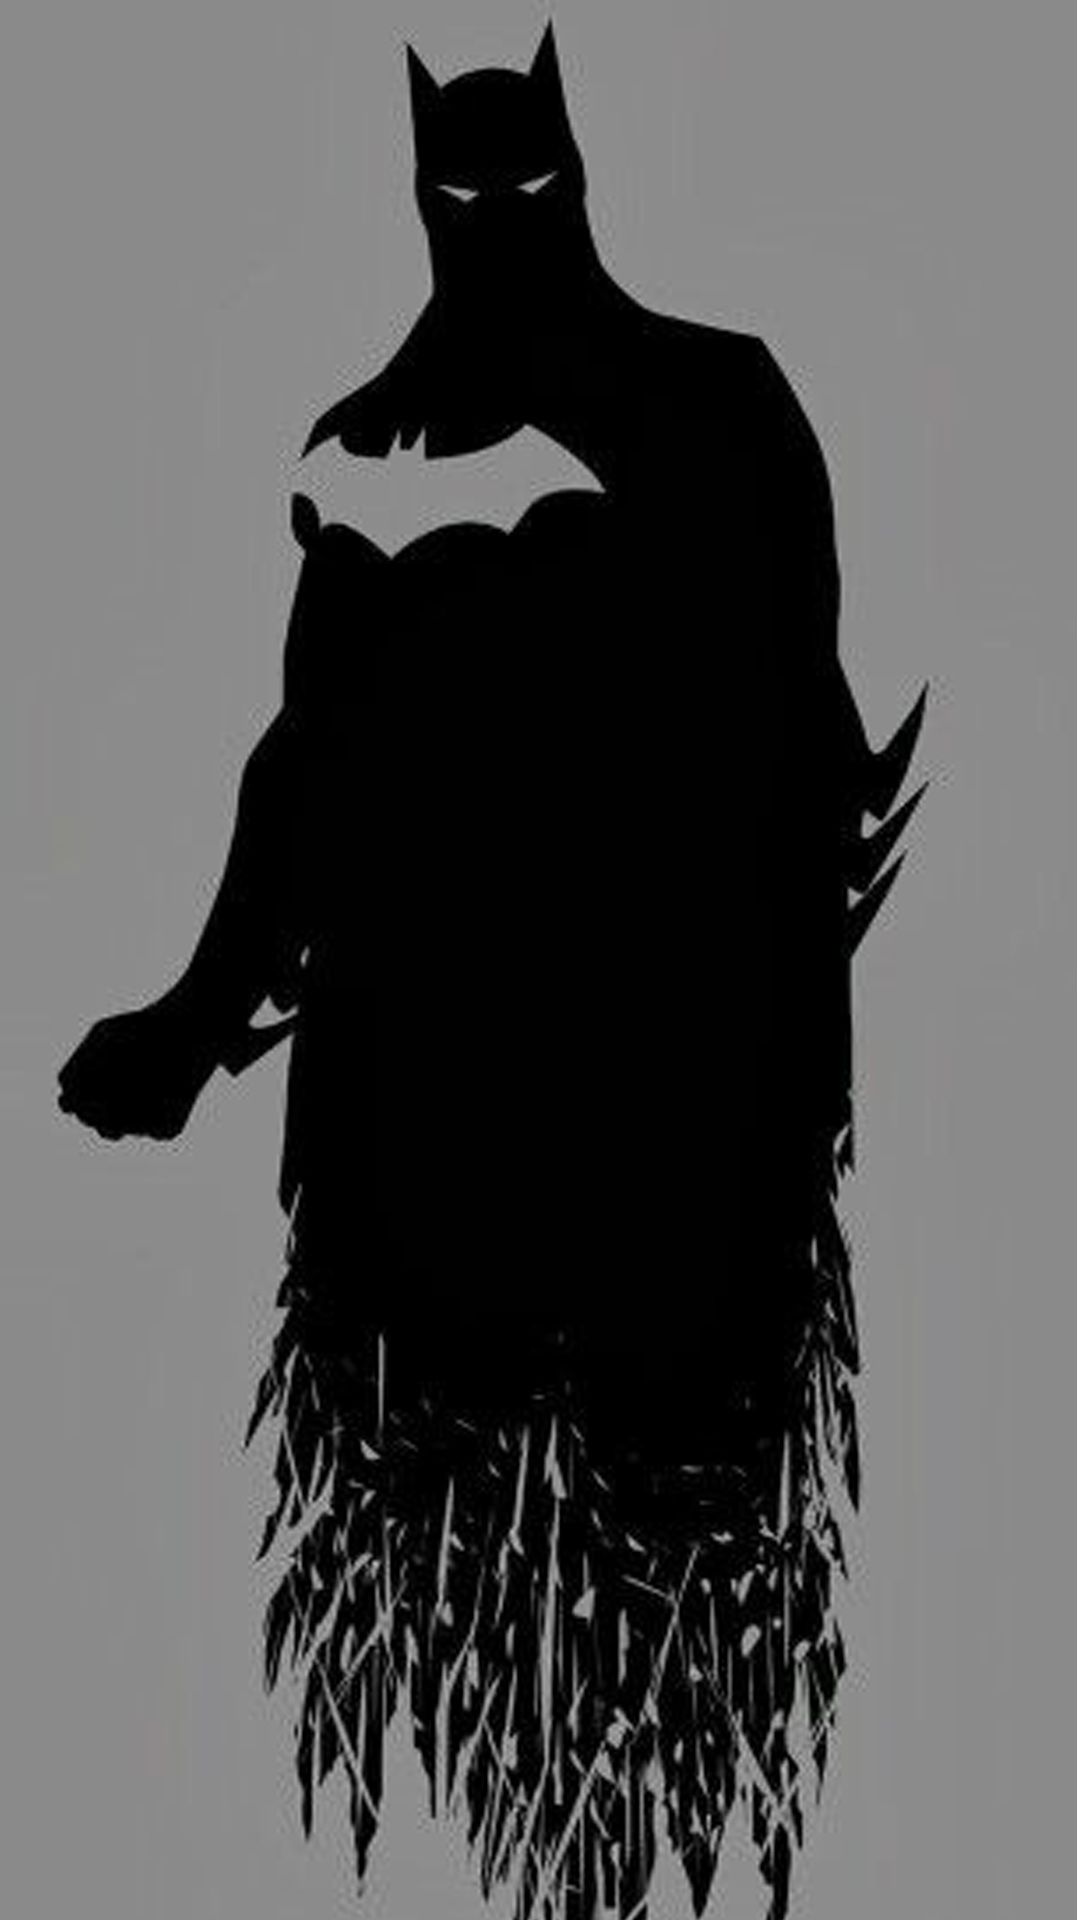 Batman Silhouette iPhone Wallpaper